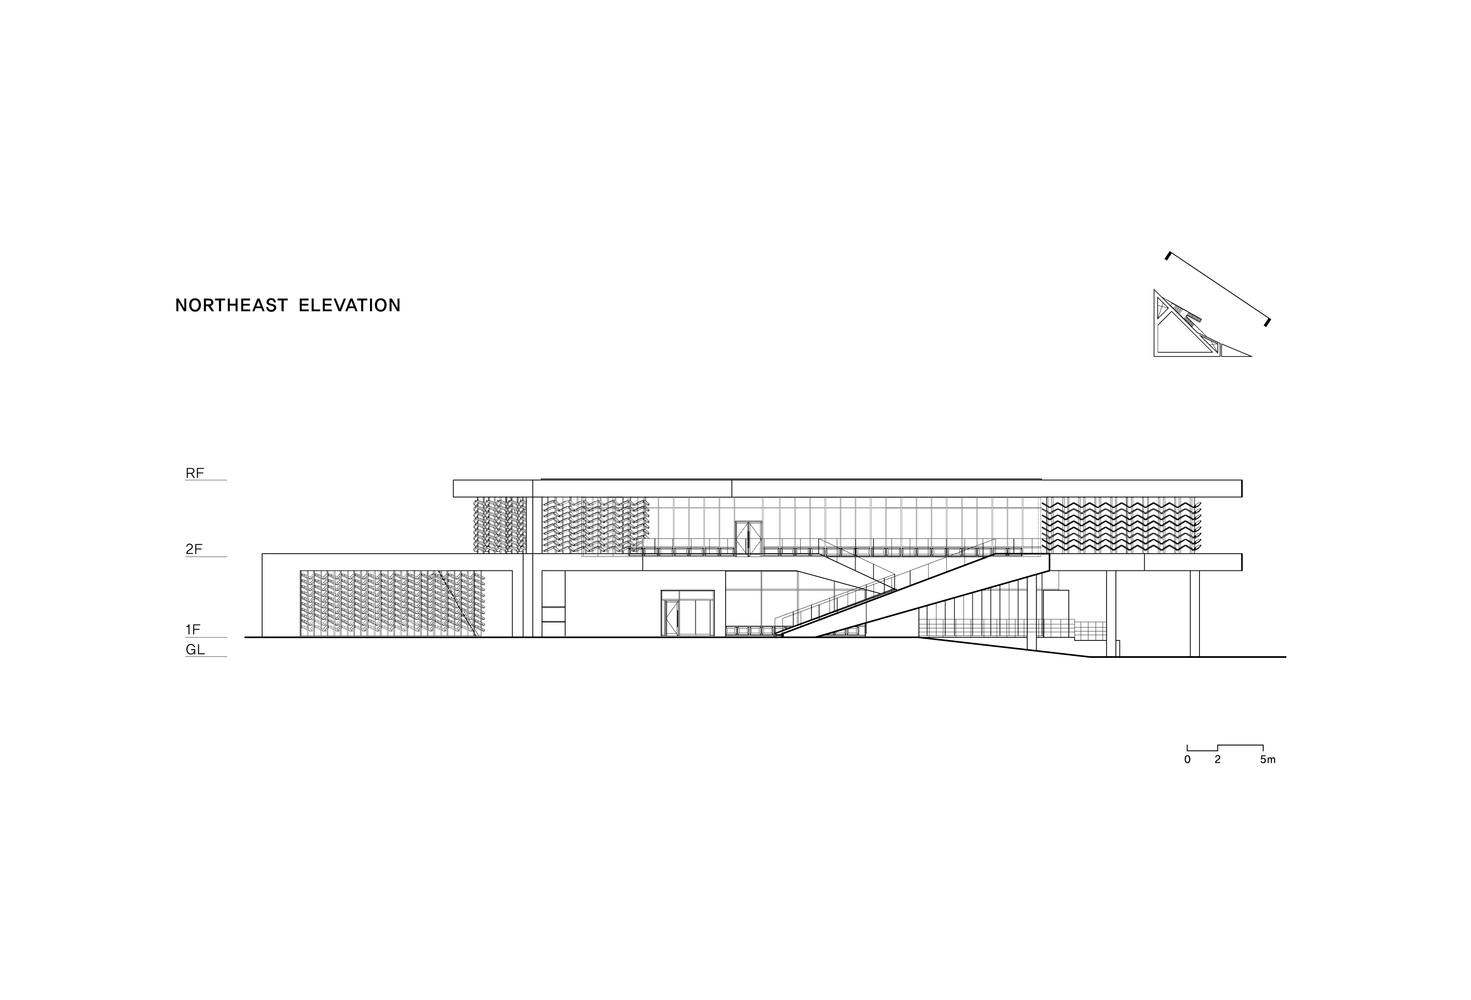 韩国木材博物馆  建筑设计  /  soft architecture lab